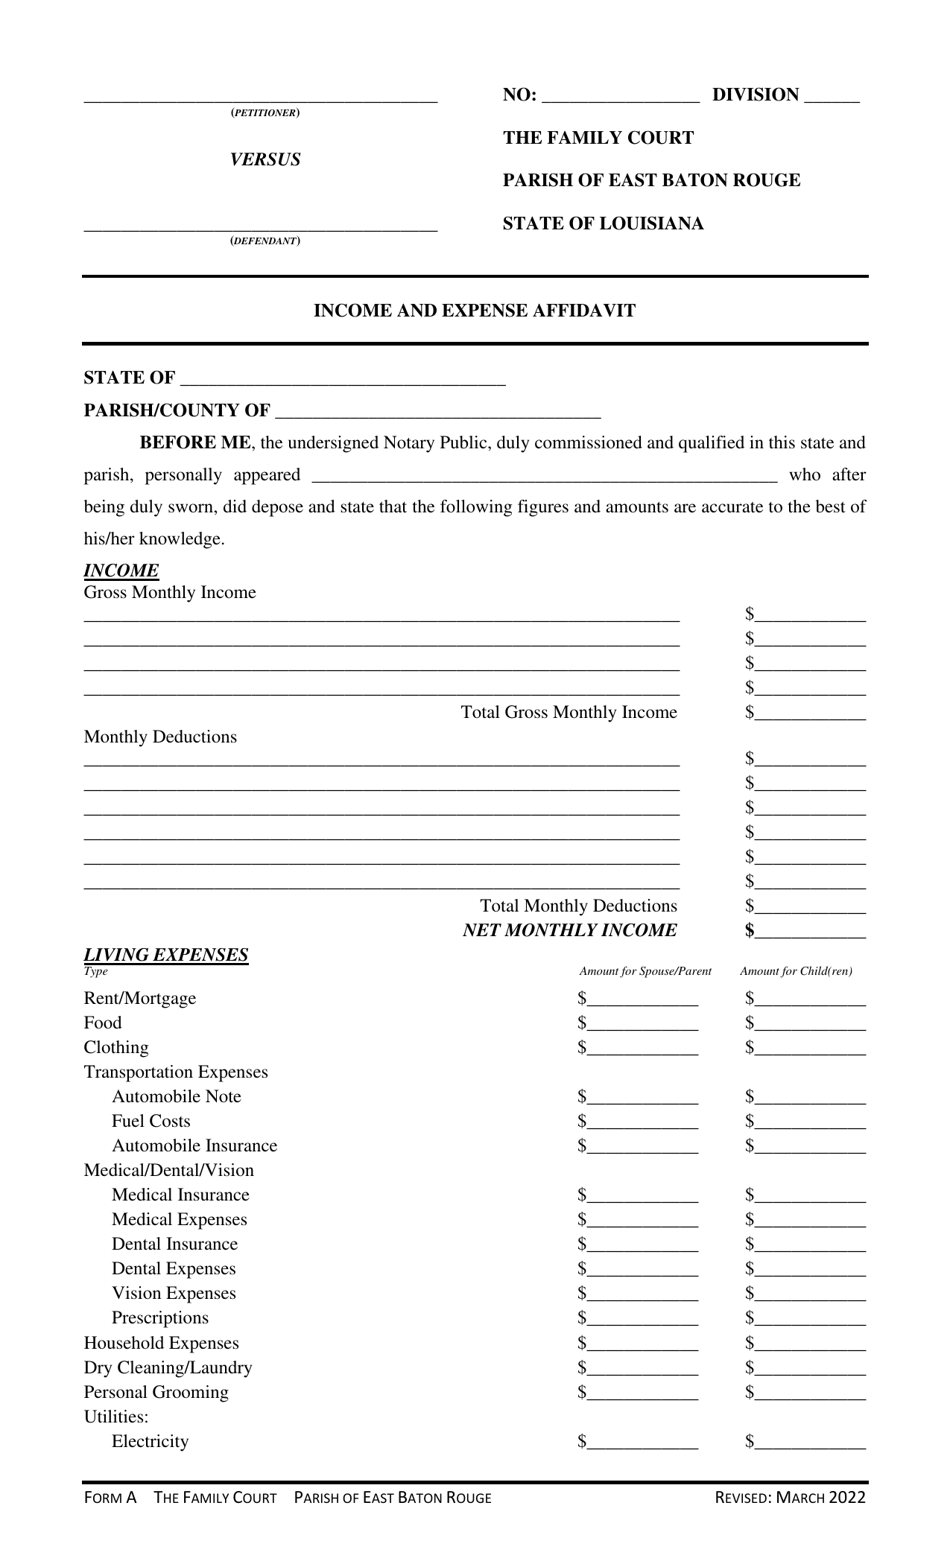 Form A Income and Expense Affidavit - Parish of East Baton Rouge, Louisiana, Page 1